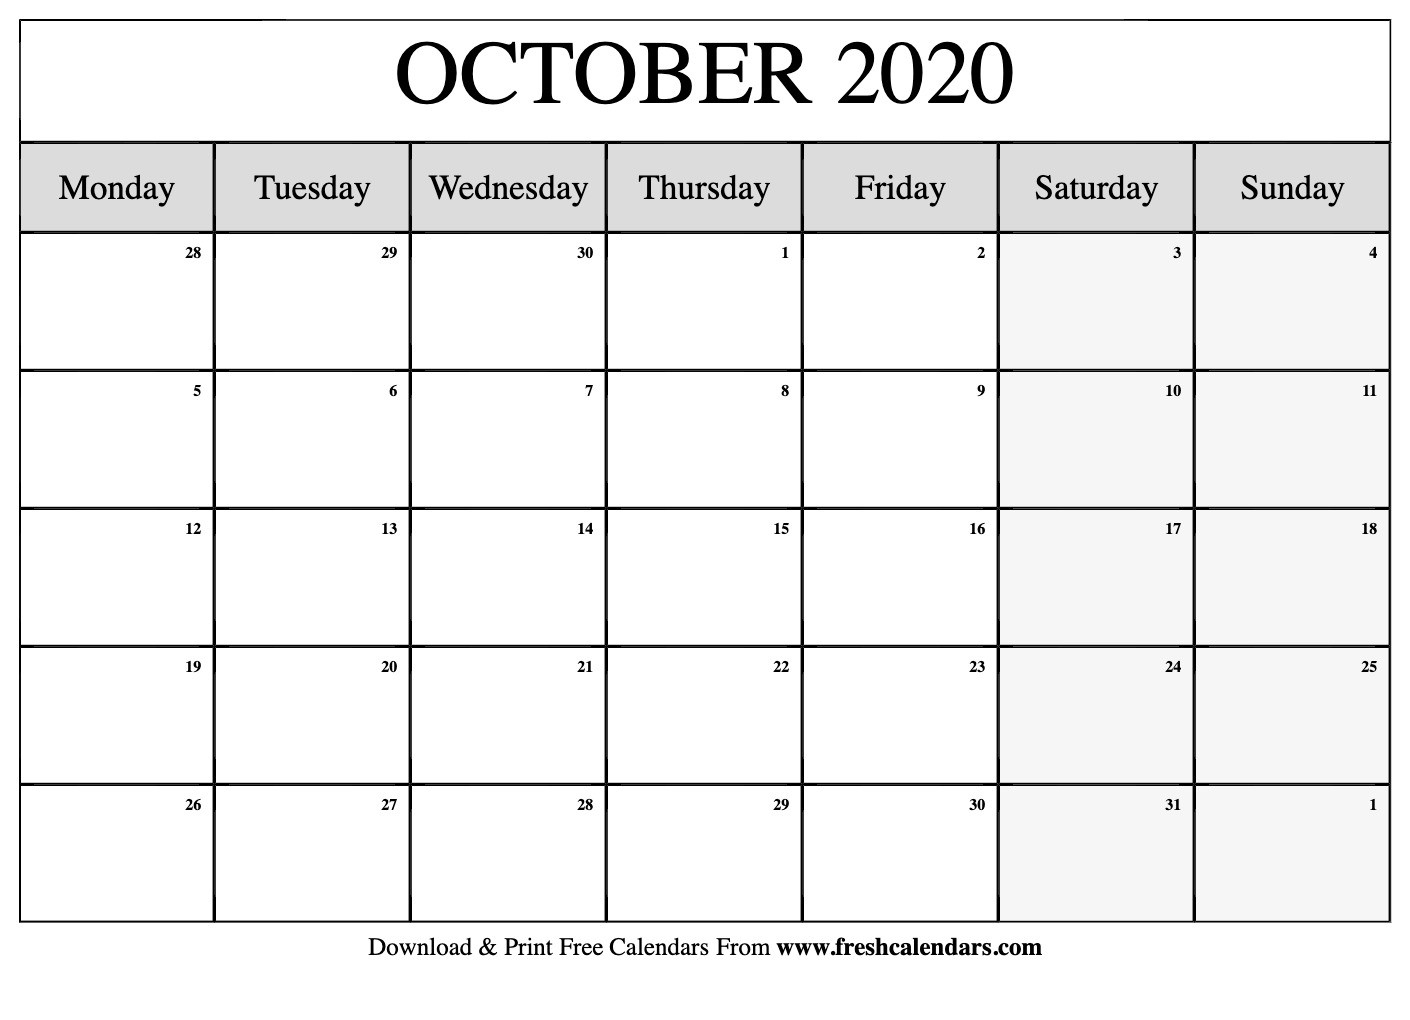 October 2020 Calendar Printable - Fresh Calendars-October 2020 Monthly Calendar Printable